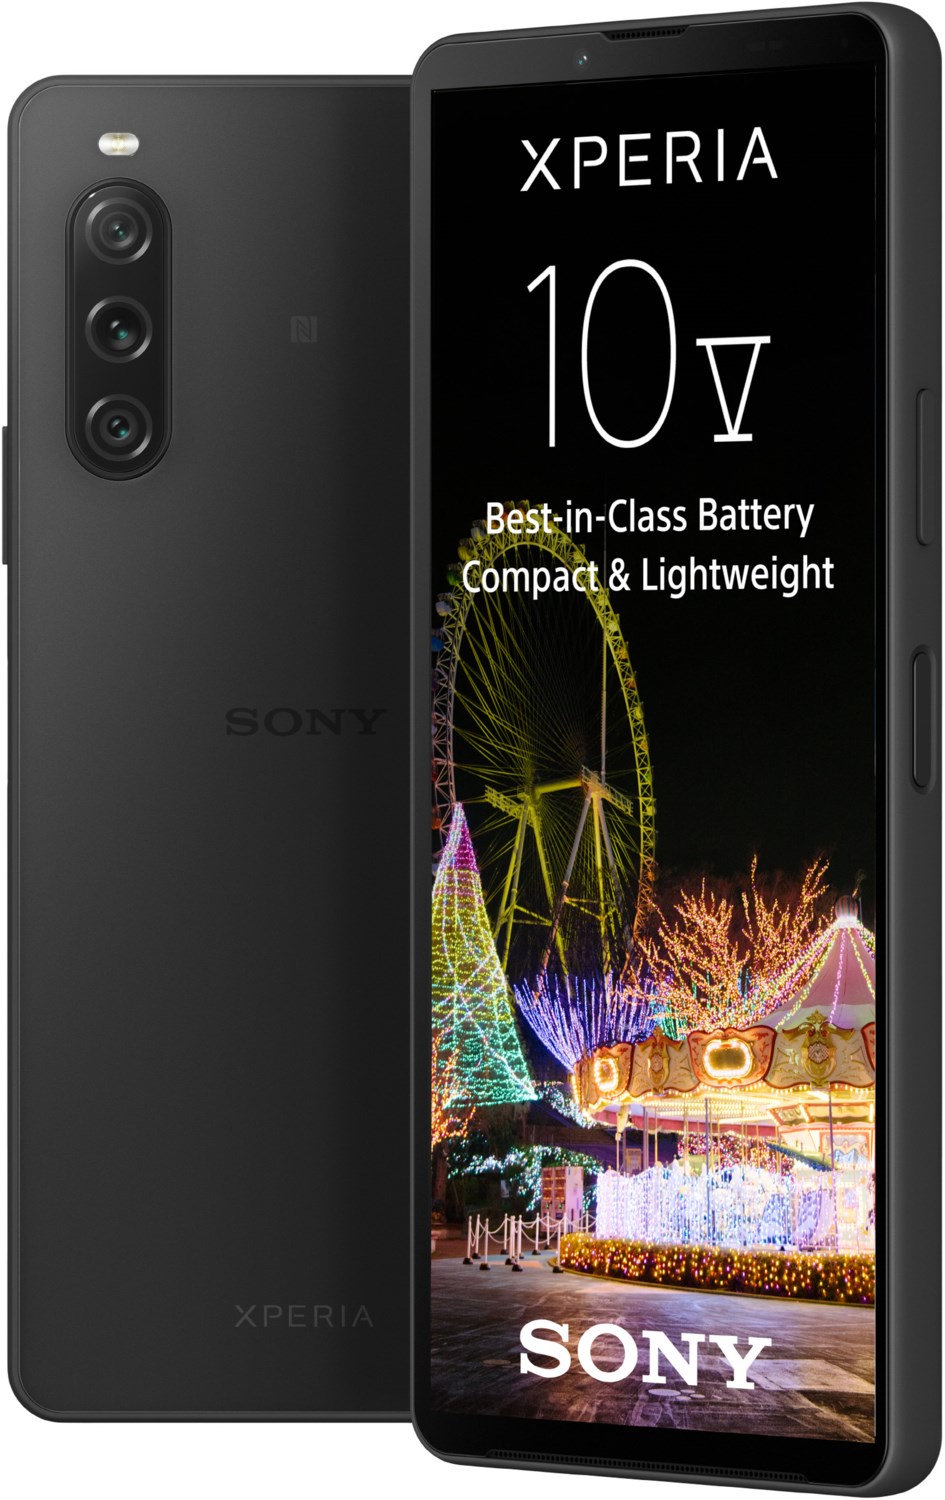 Sony Xperia 10 V Smartphone gojischwarz | EURONICS | alle Smartphones